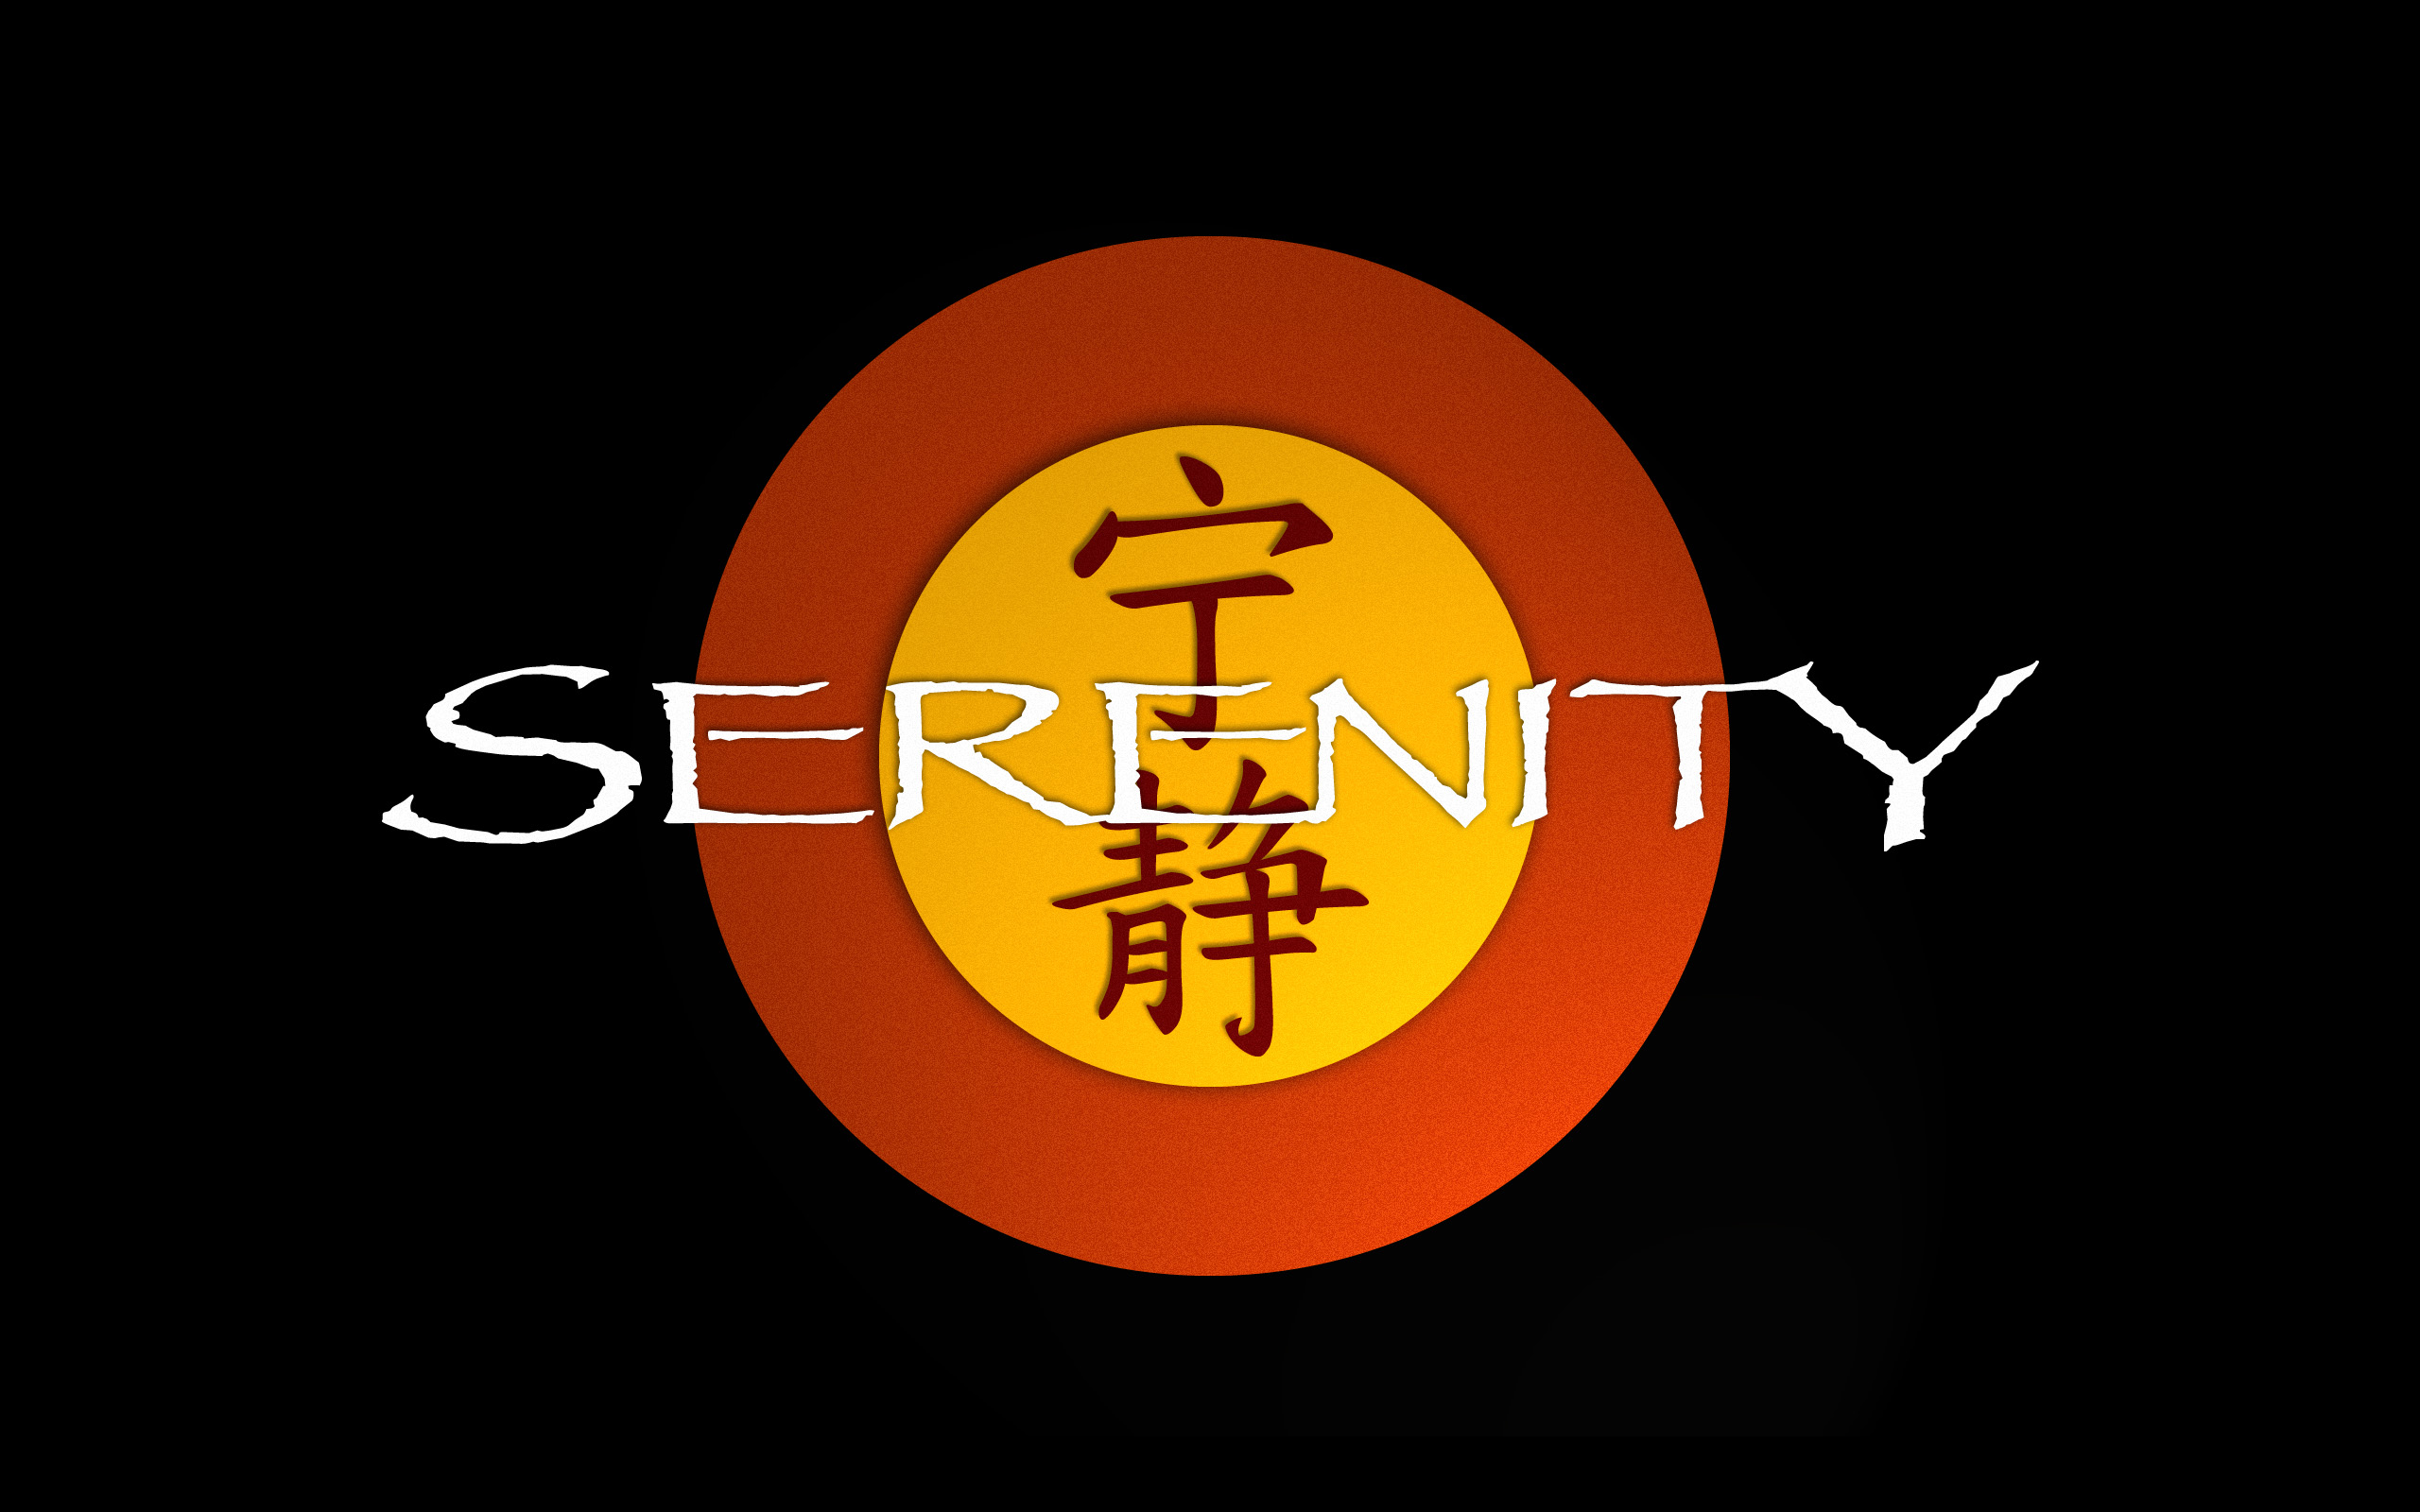 General 2560x1600 Firefly Serenity logo